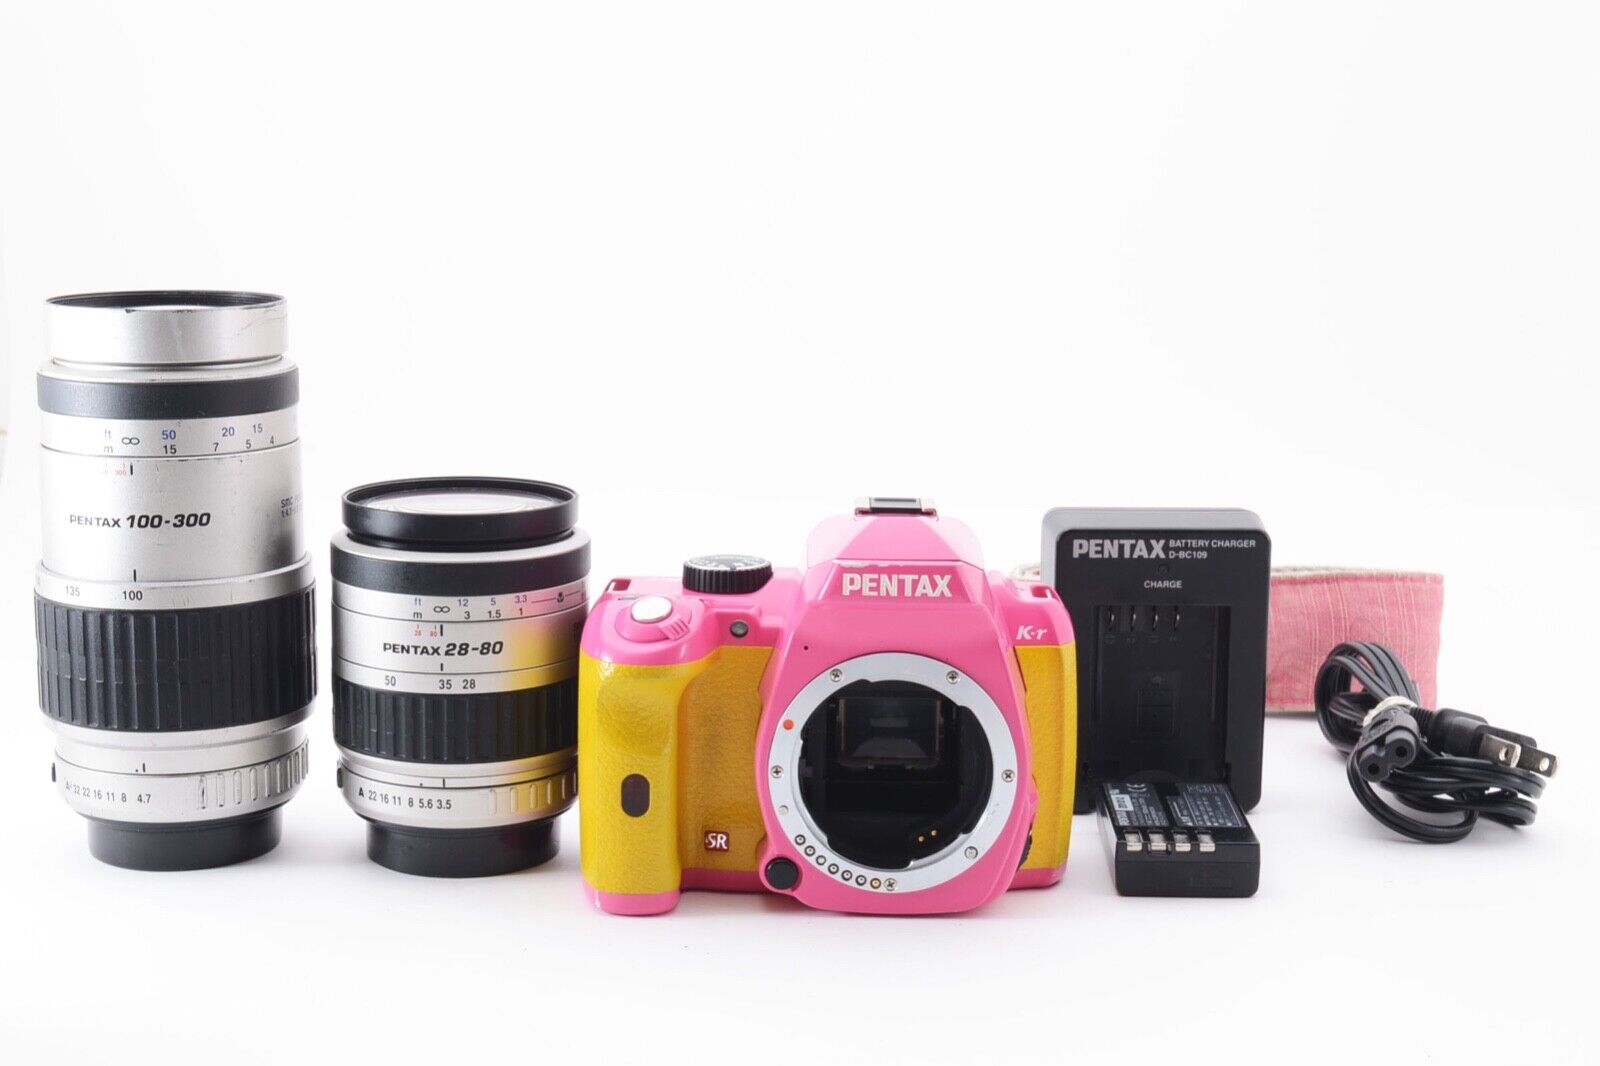 PENTAX K-r 12.4 MP Digital SLR Camera Pink×Yellow Body w/Two Lens Set from Japan